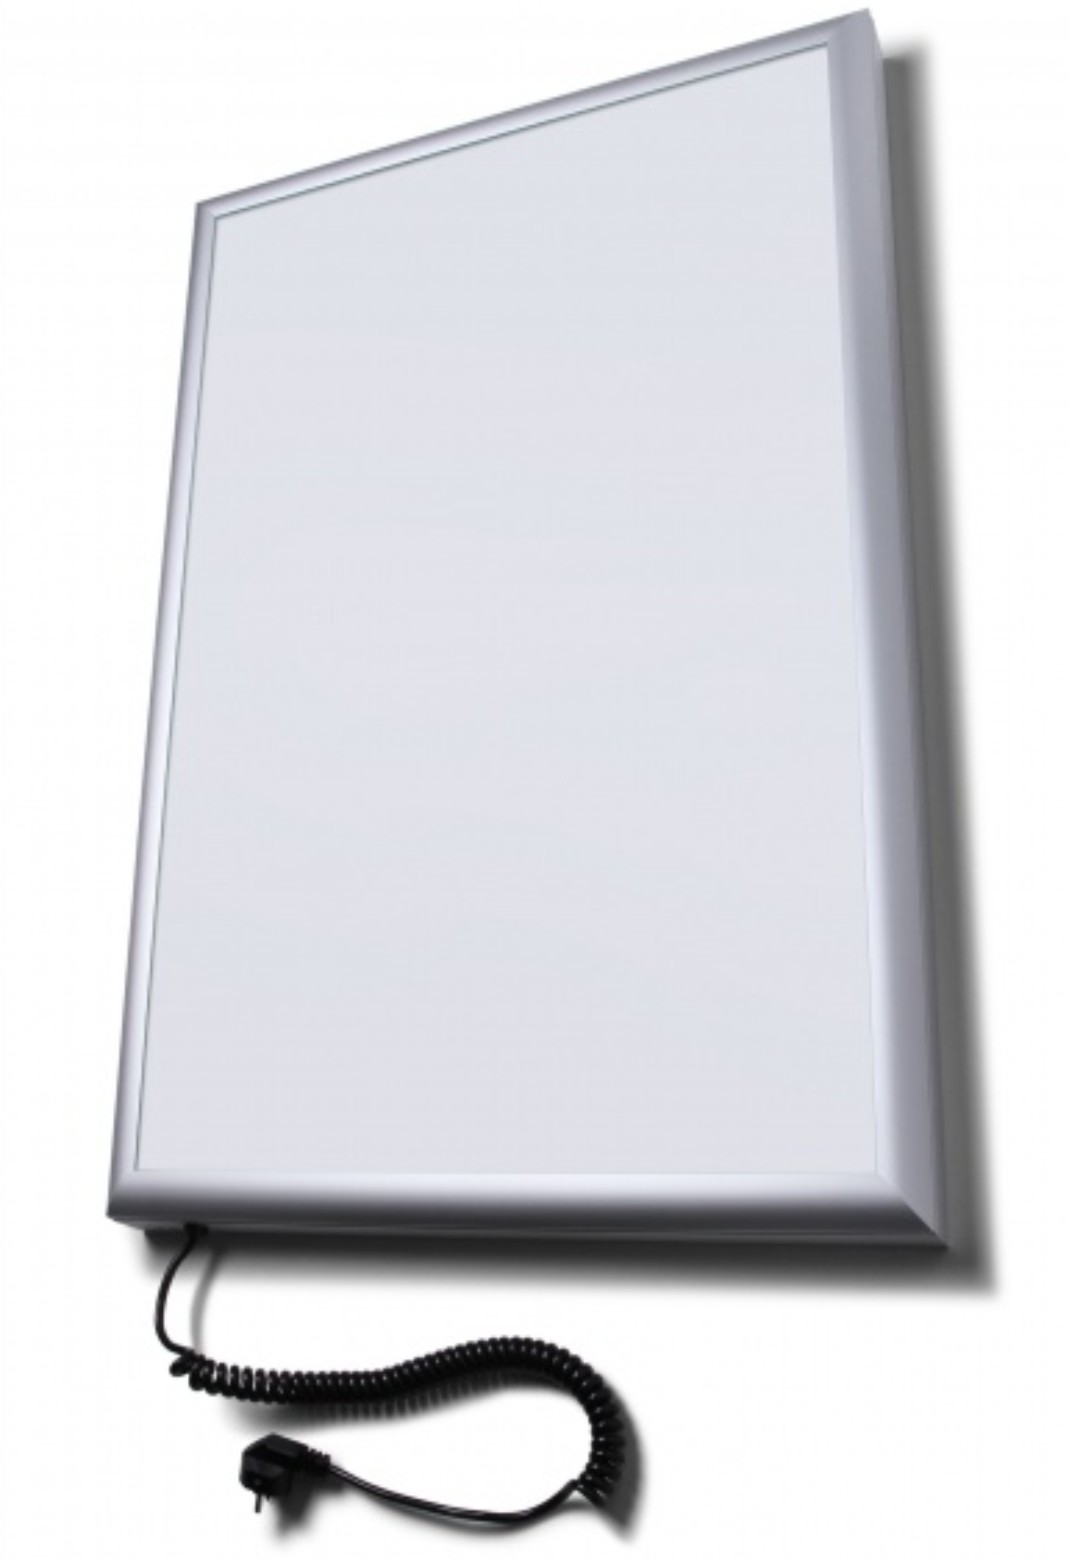 Flat front poster light box